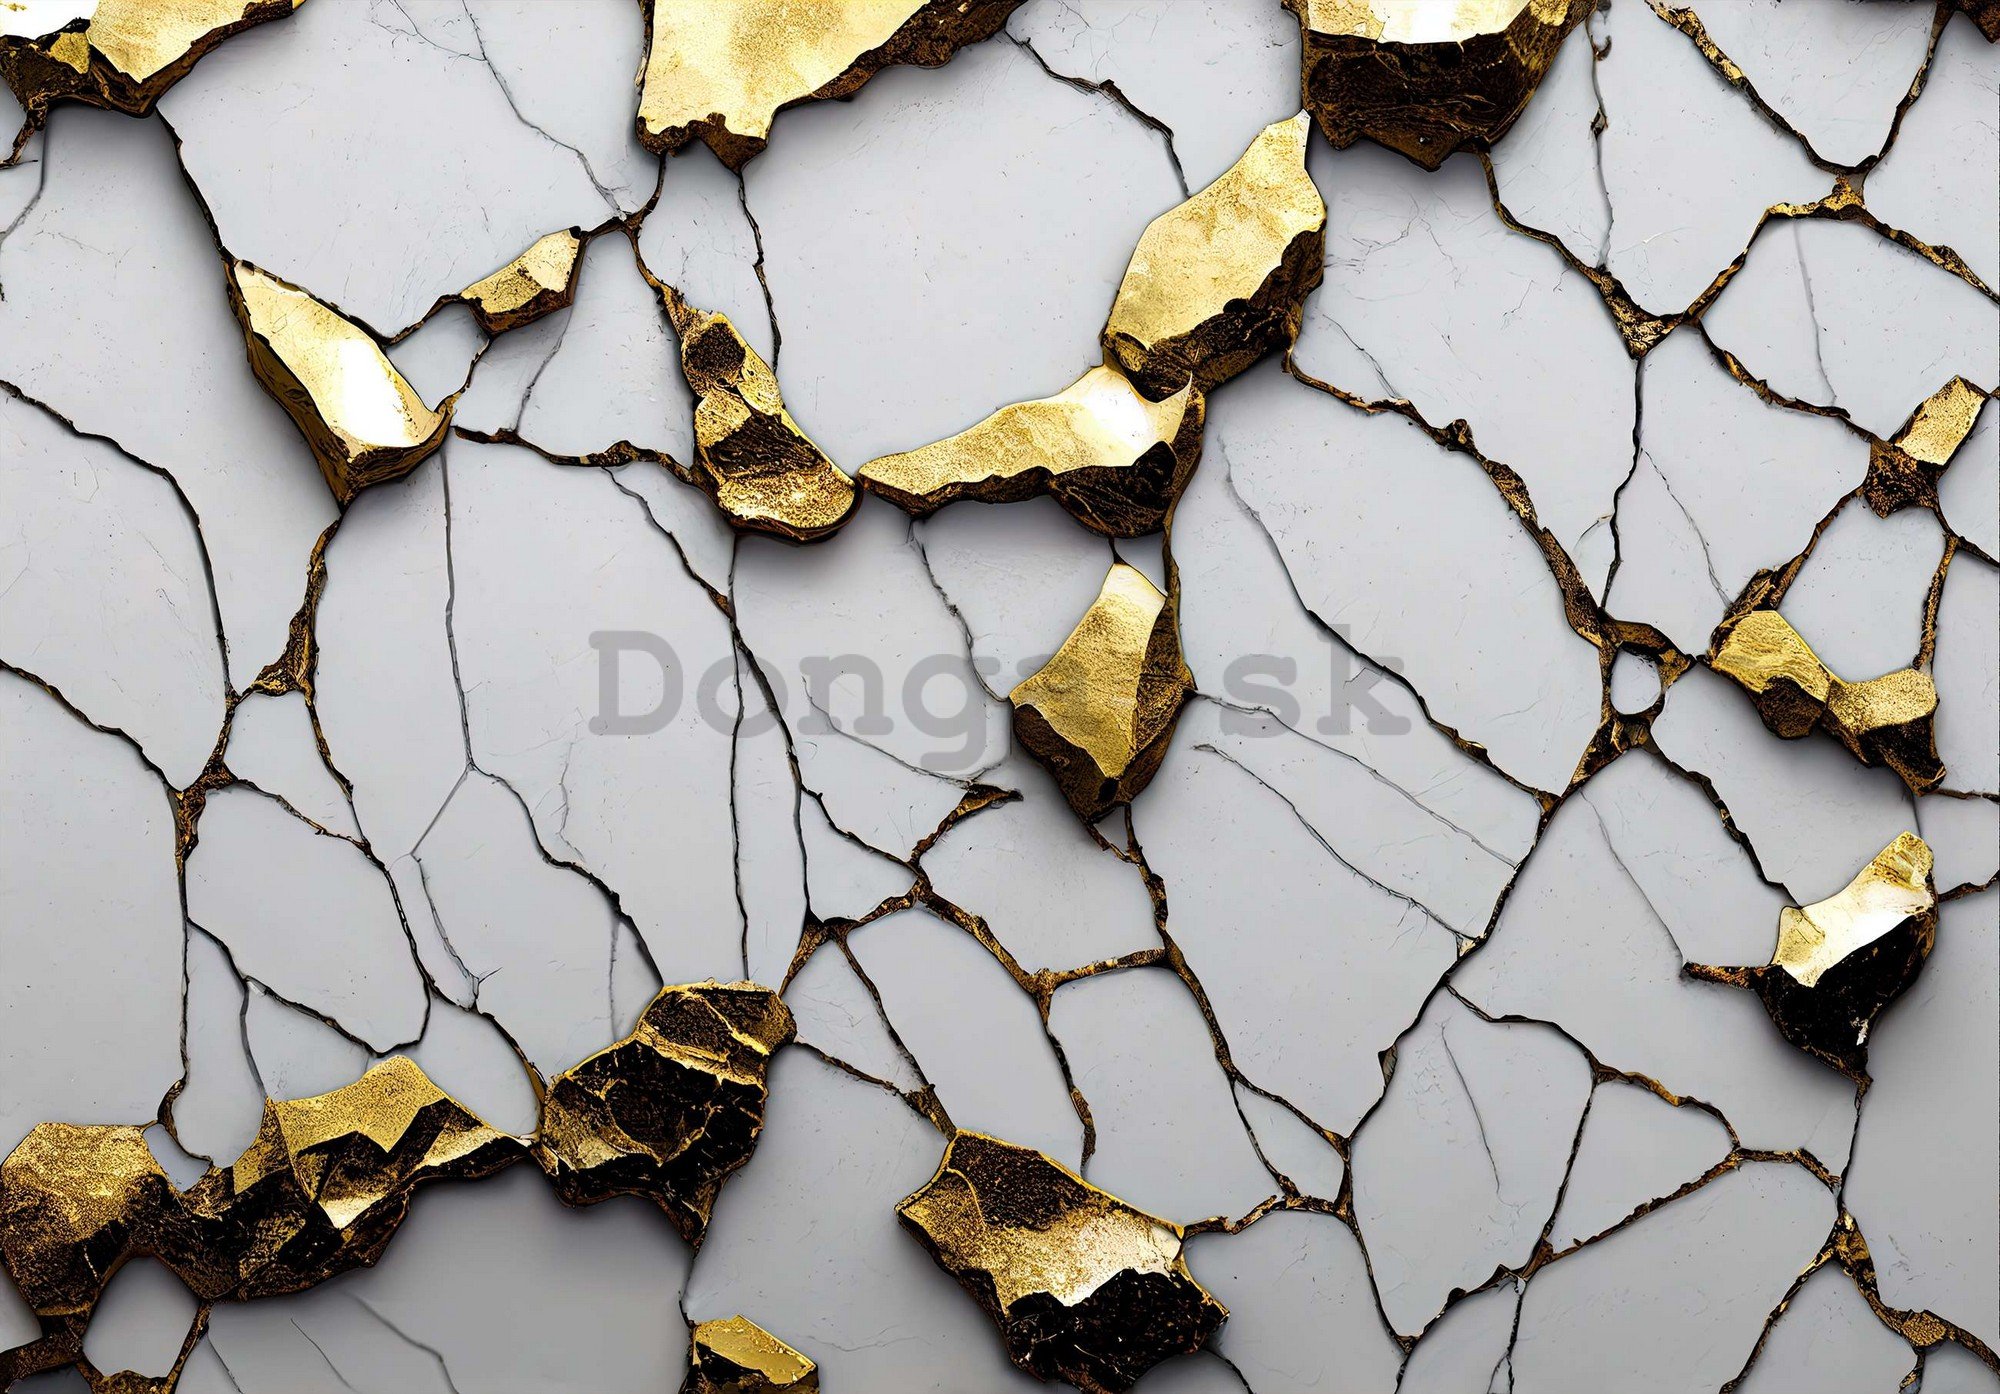 Fototapeta vliesová: Glamour imitace zlatého mramoru s bílou zdí - 368x254 cm